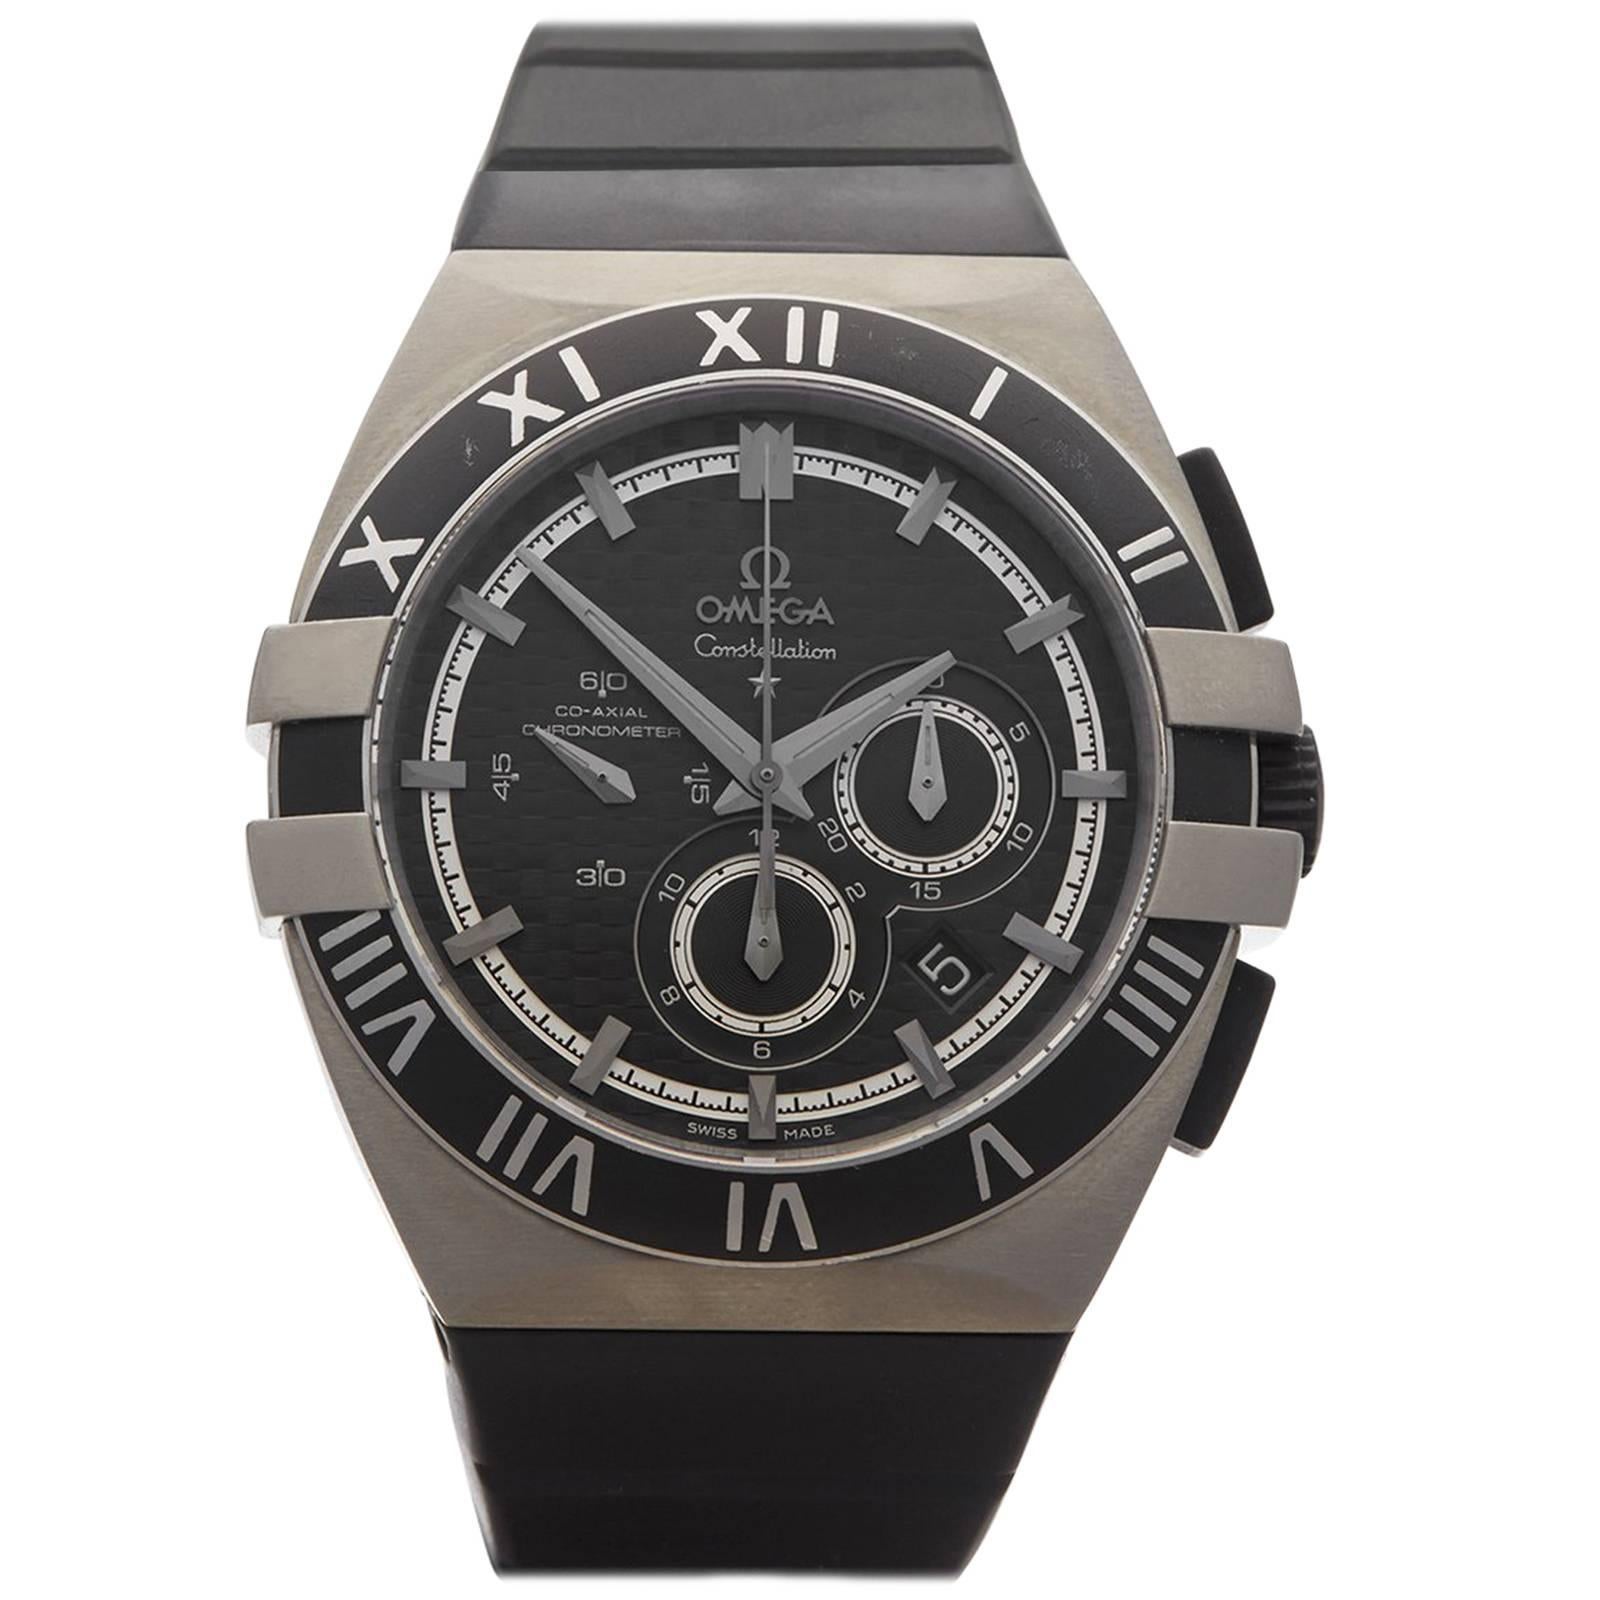  Omega Titanium Constellation Double Eagle Chronograph Automatic Wristwatch